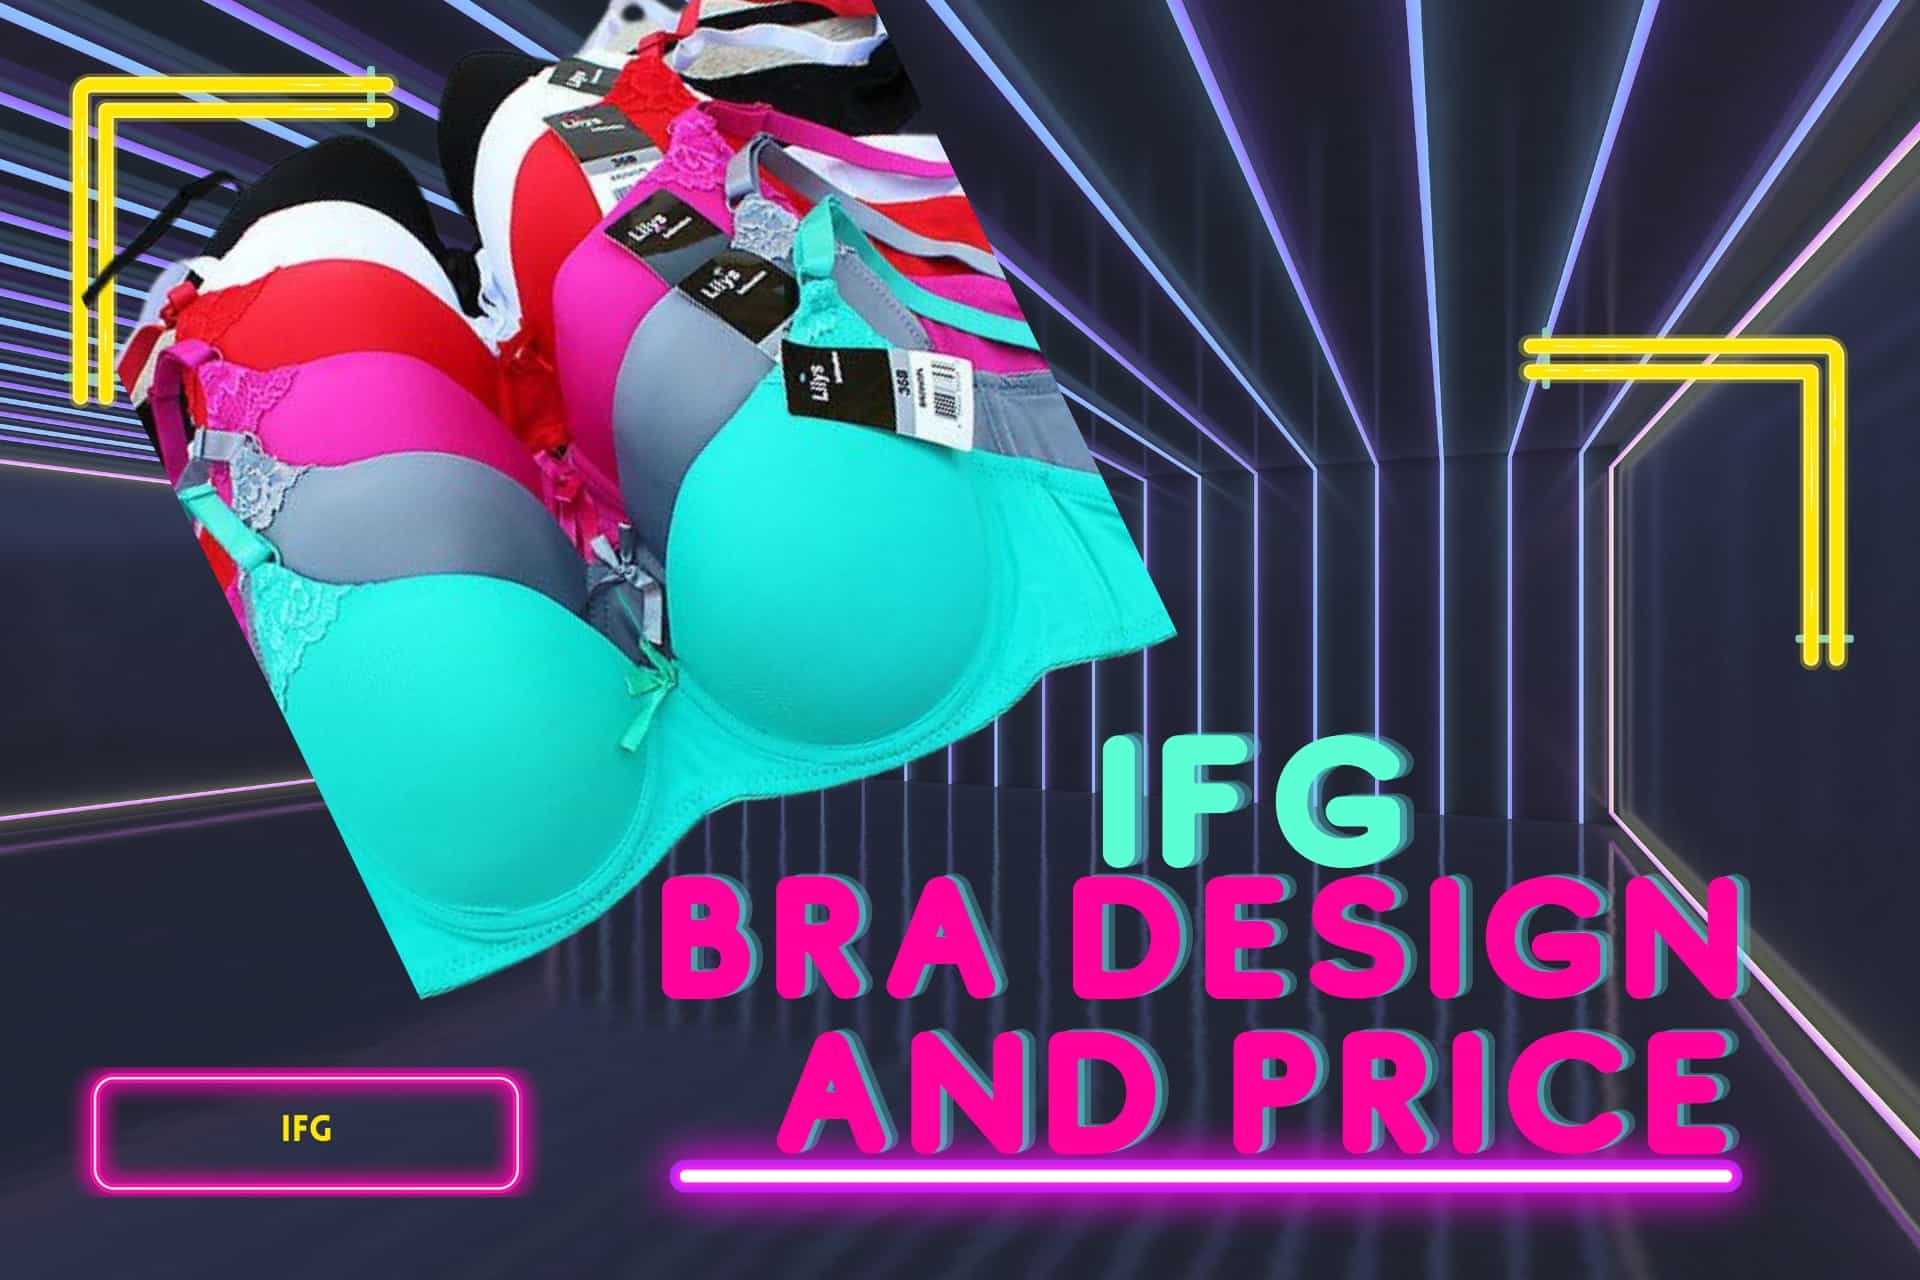 https://sophi.pk/wp-content/uploads/2023/01/ifg-bra-design-and-price.jpg